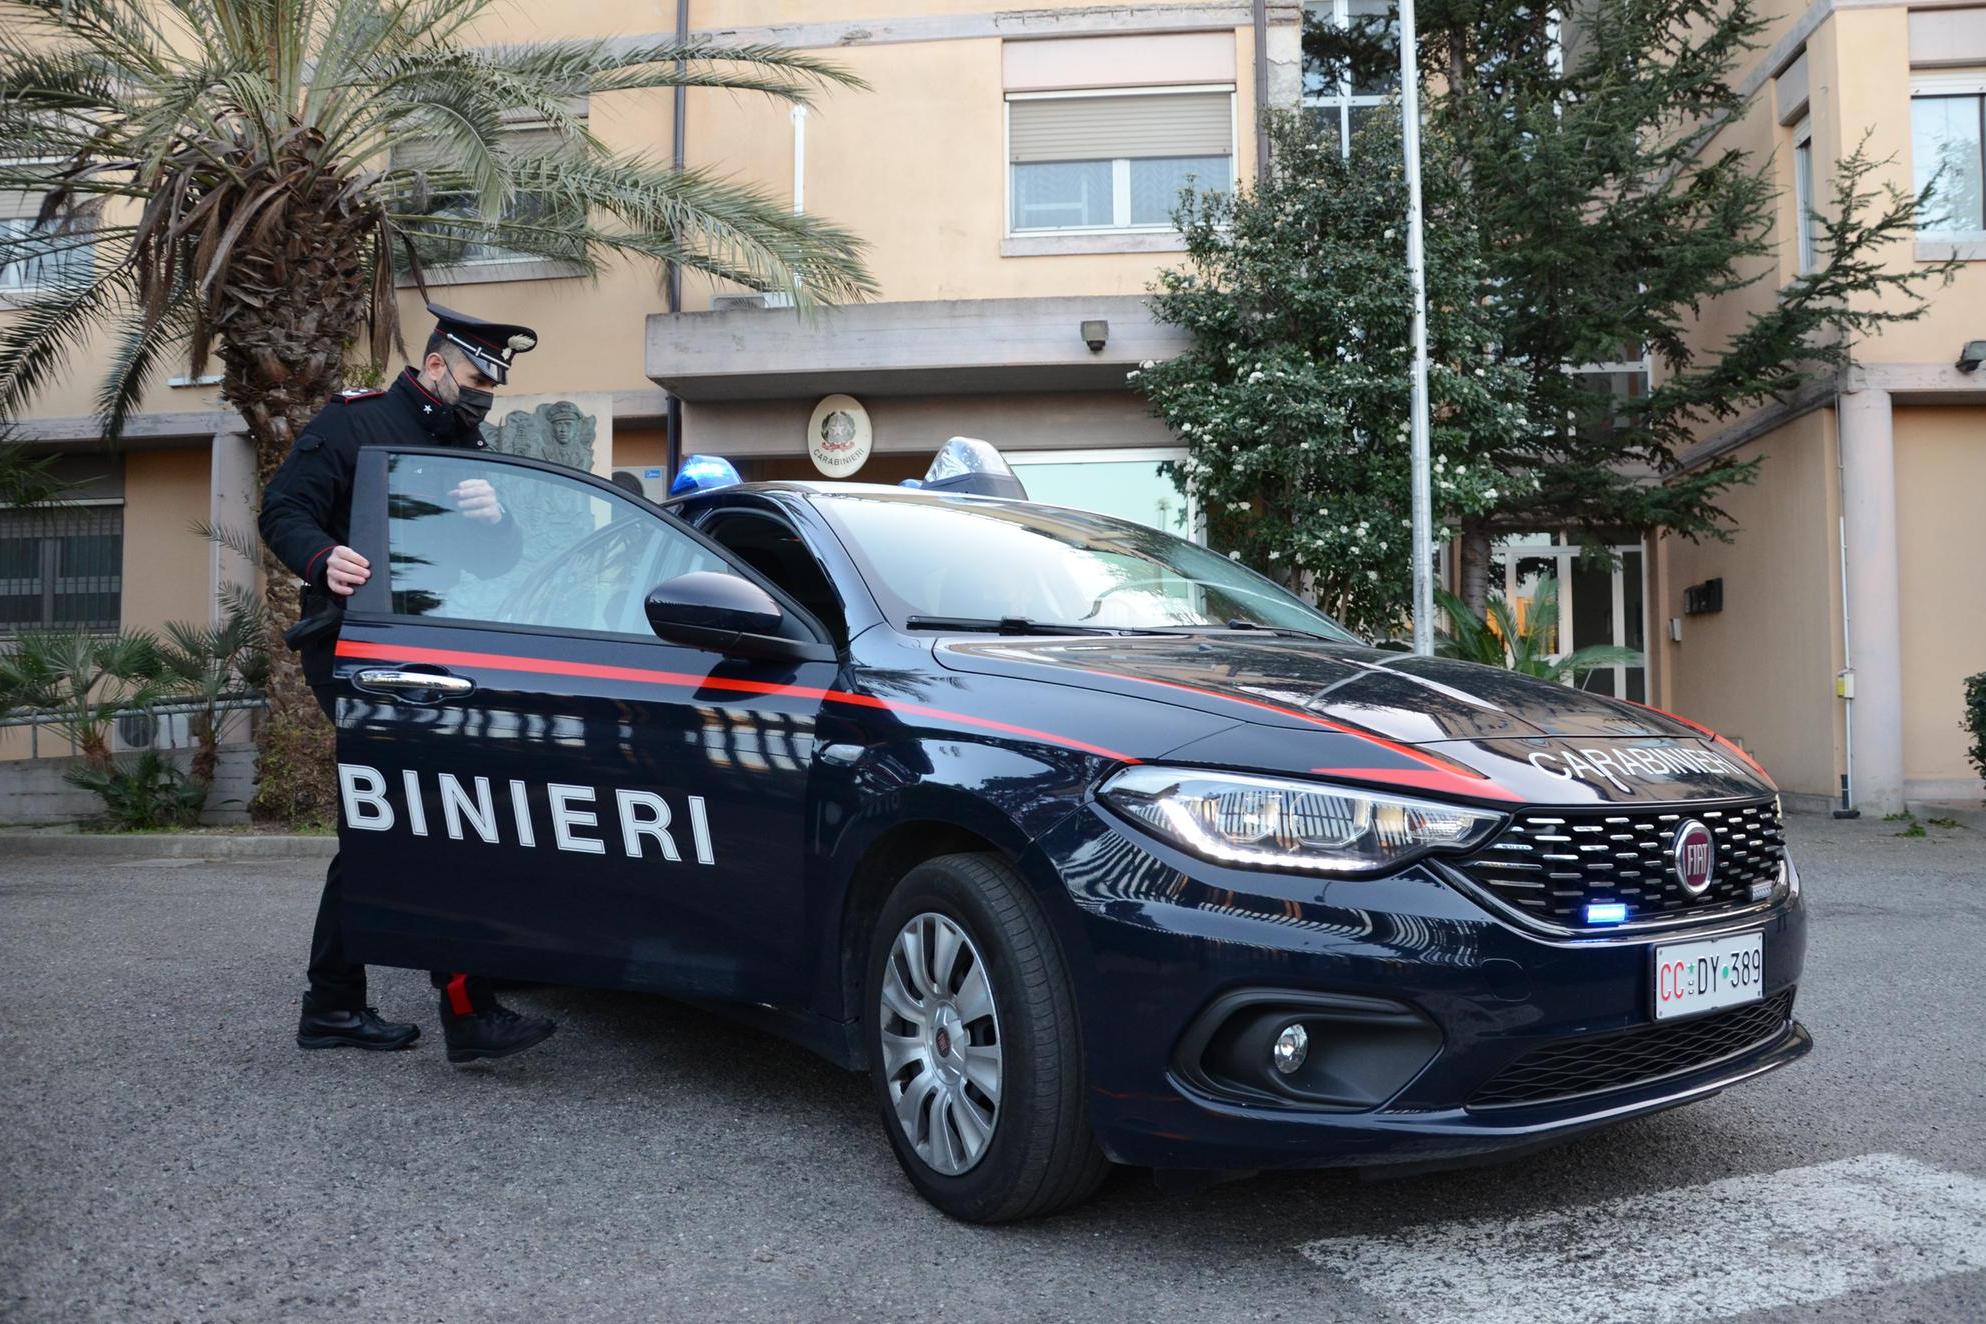 Furto nella casa parrocchiale, 54enne in arresto a Domusnovas (foto carabinieri)